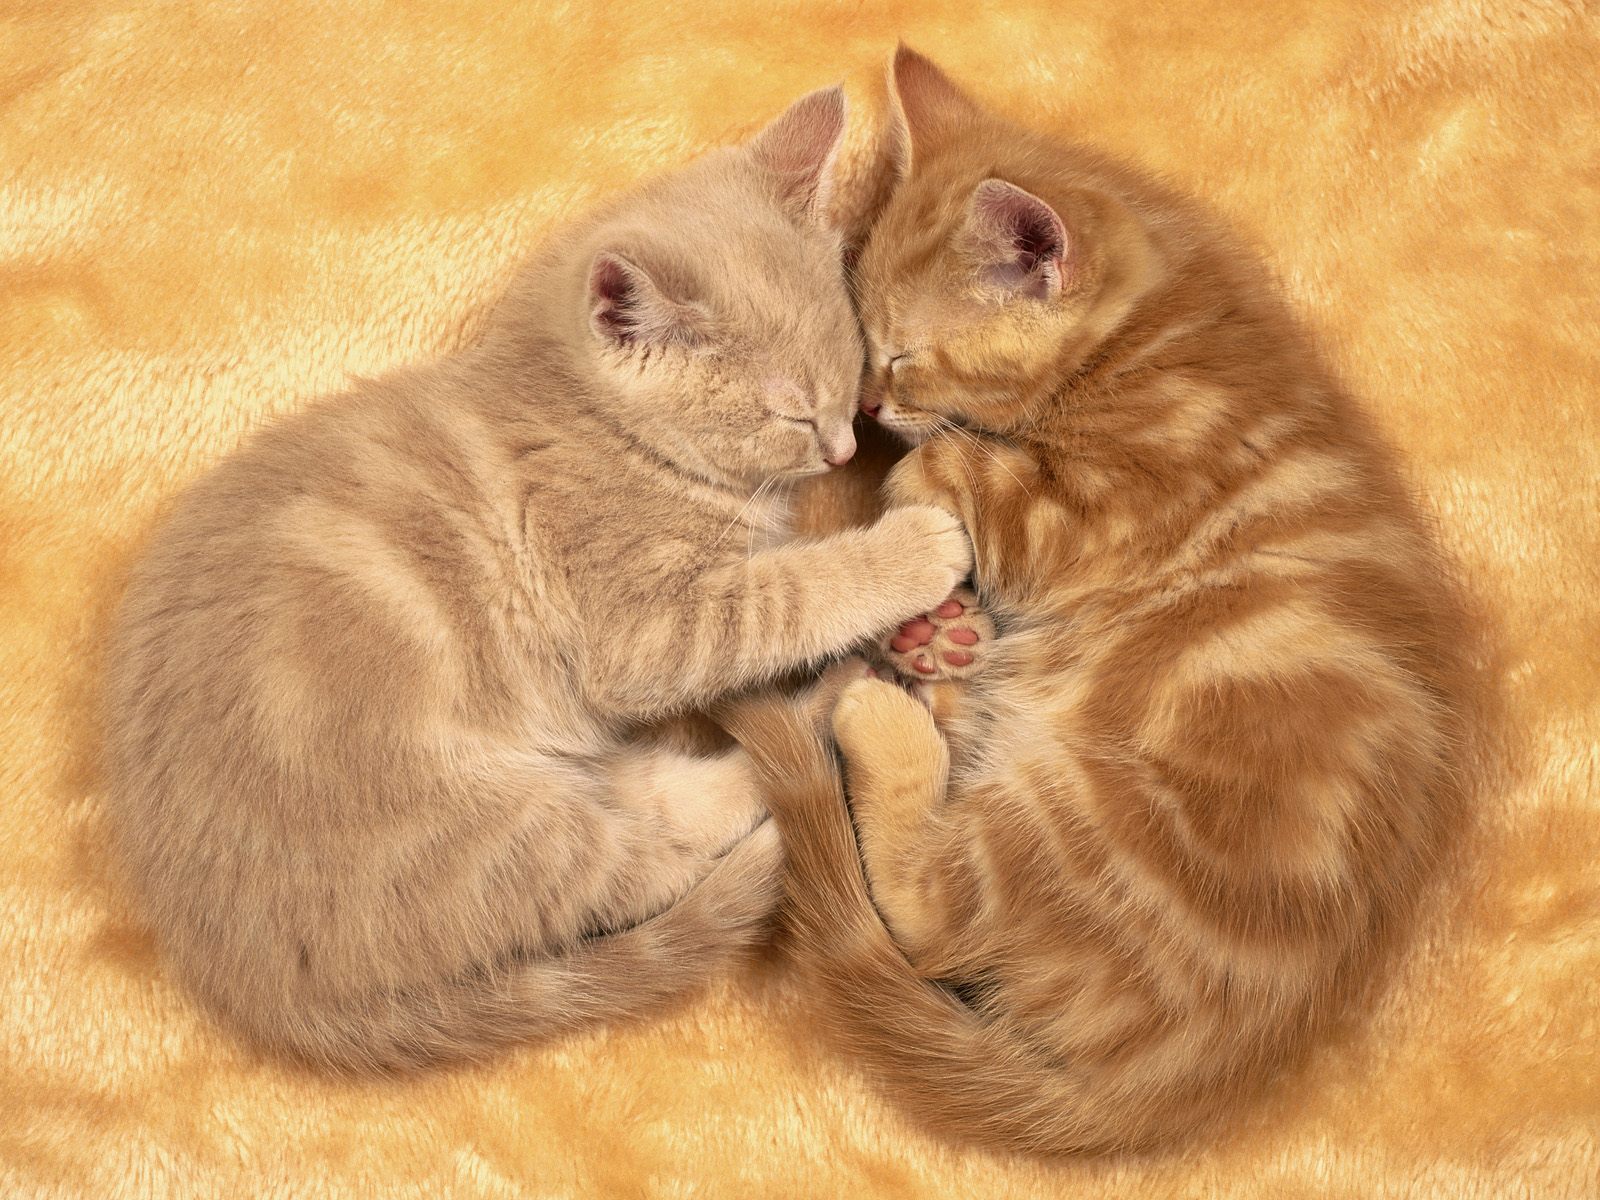 Just Love - Cats Wallpaper (14749954) - Fanpop